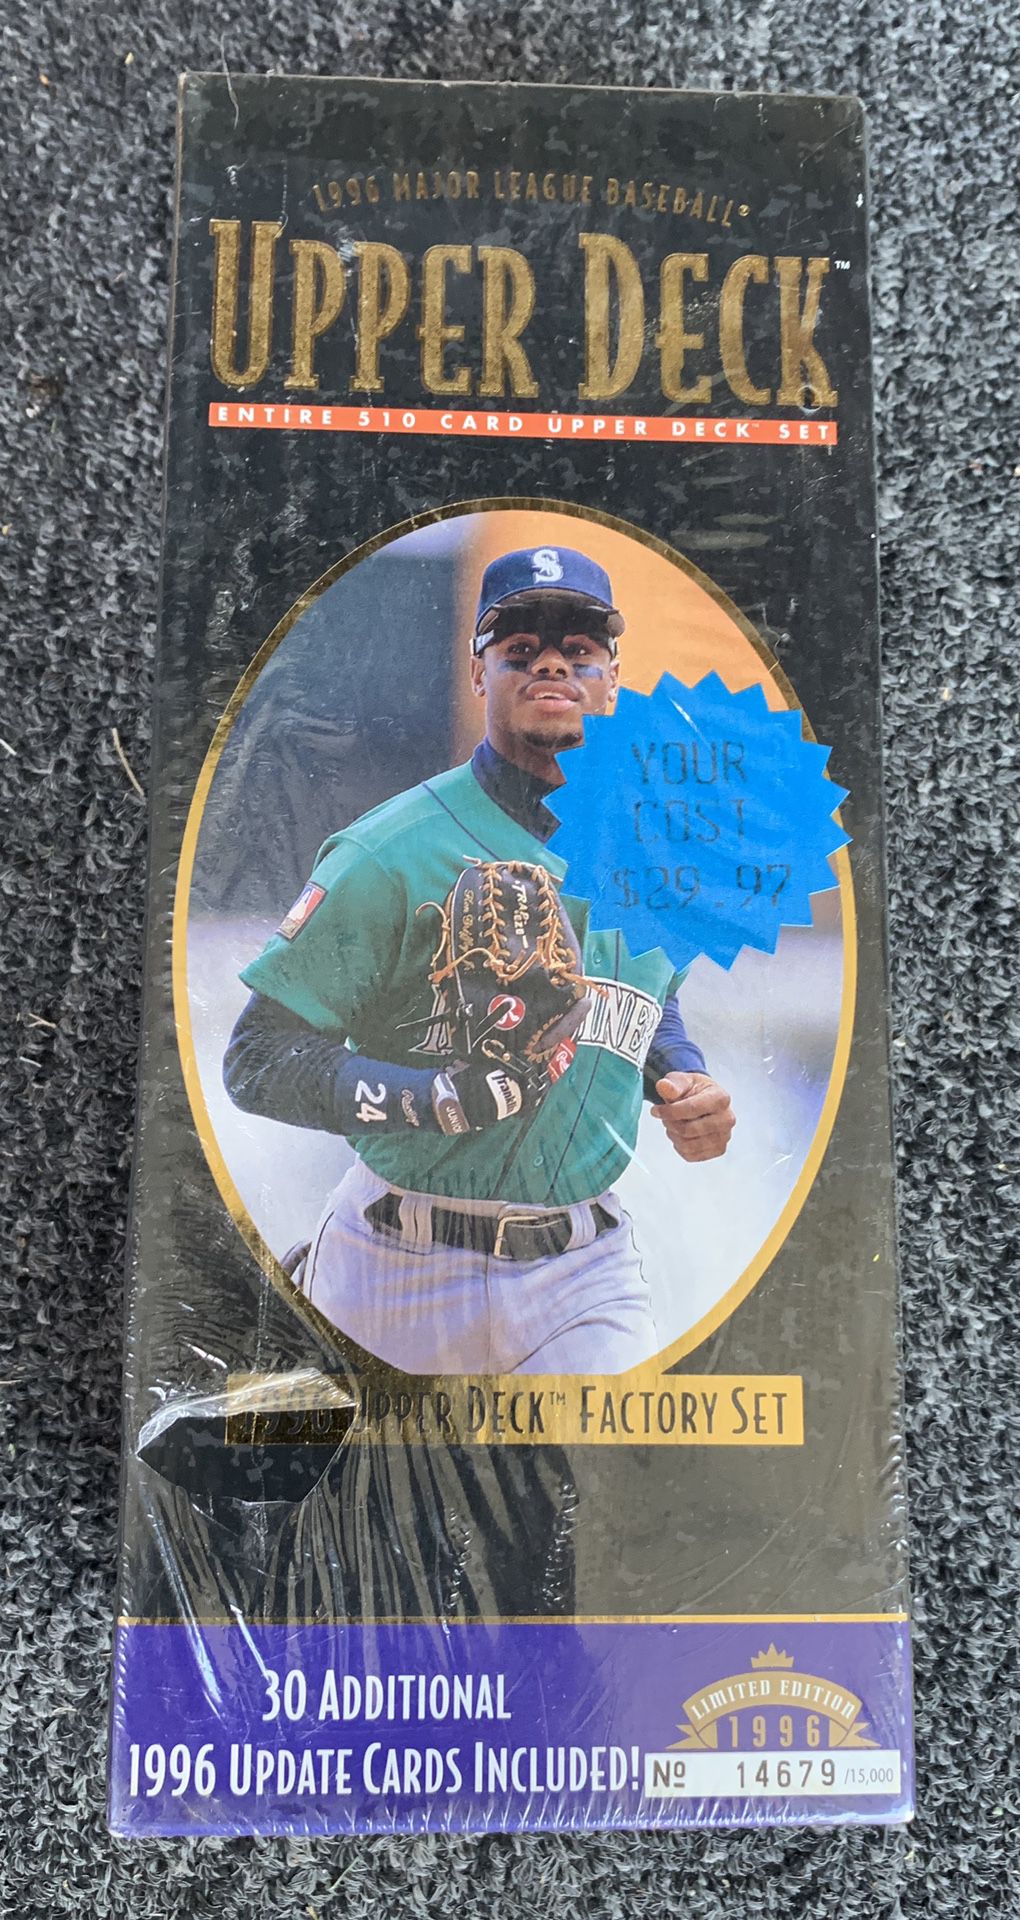 1996 Upper Deck Factory Sealed Baseball Card Set